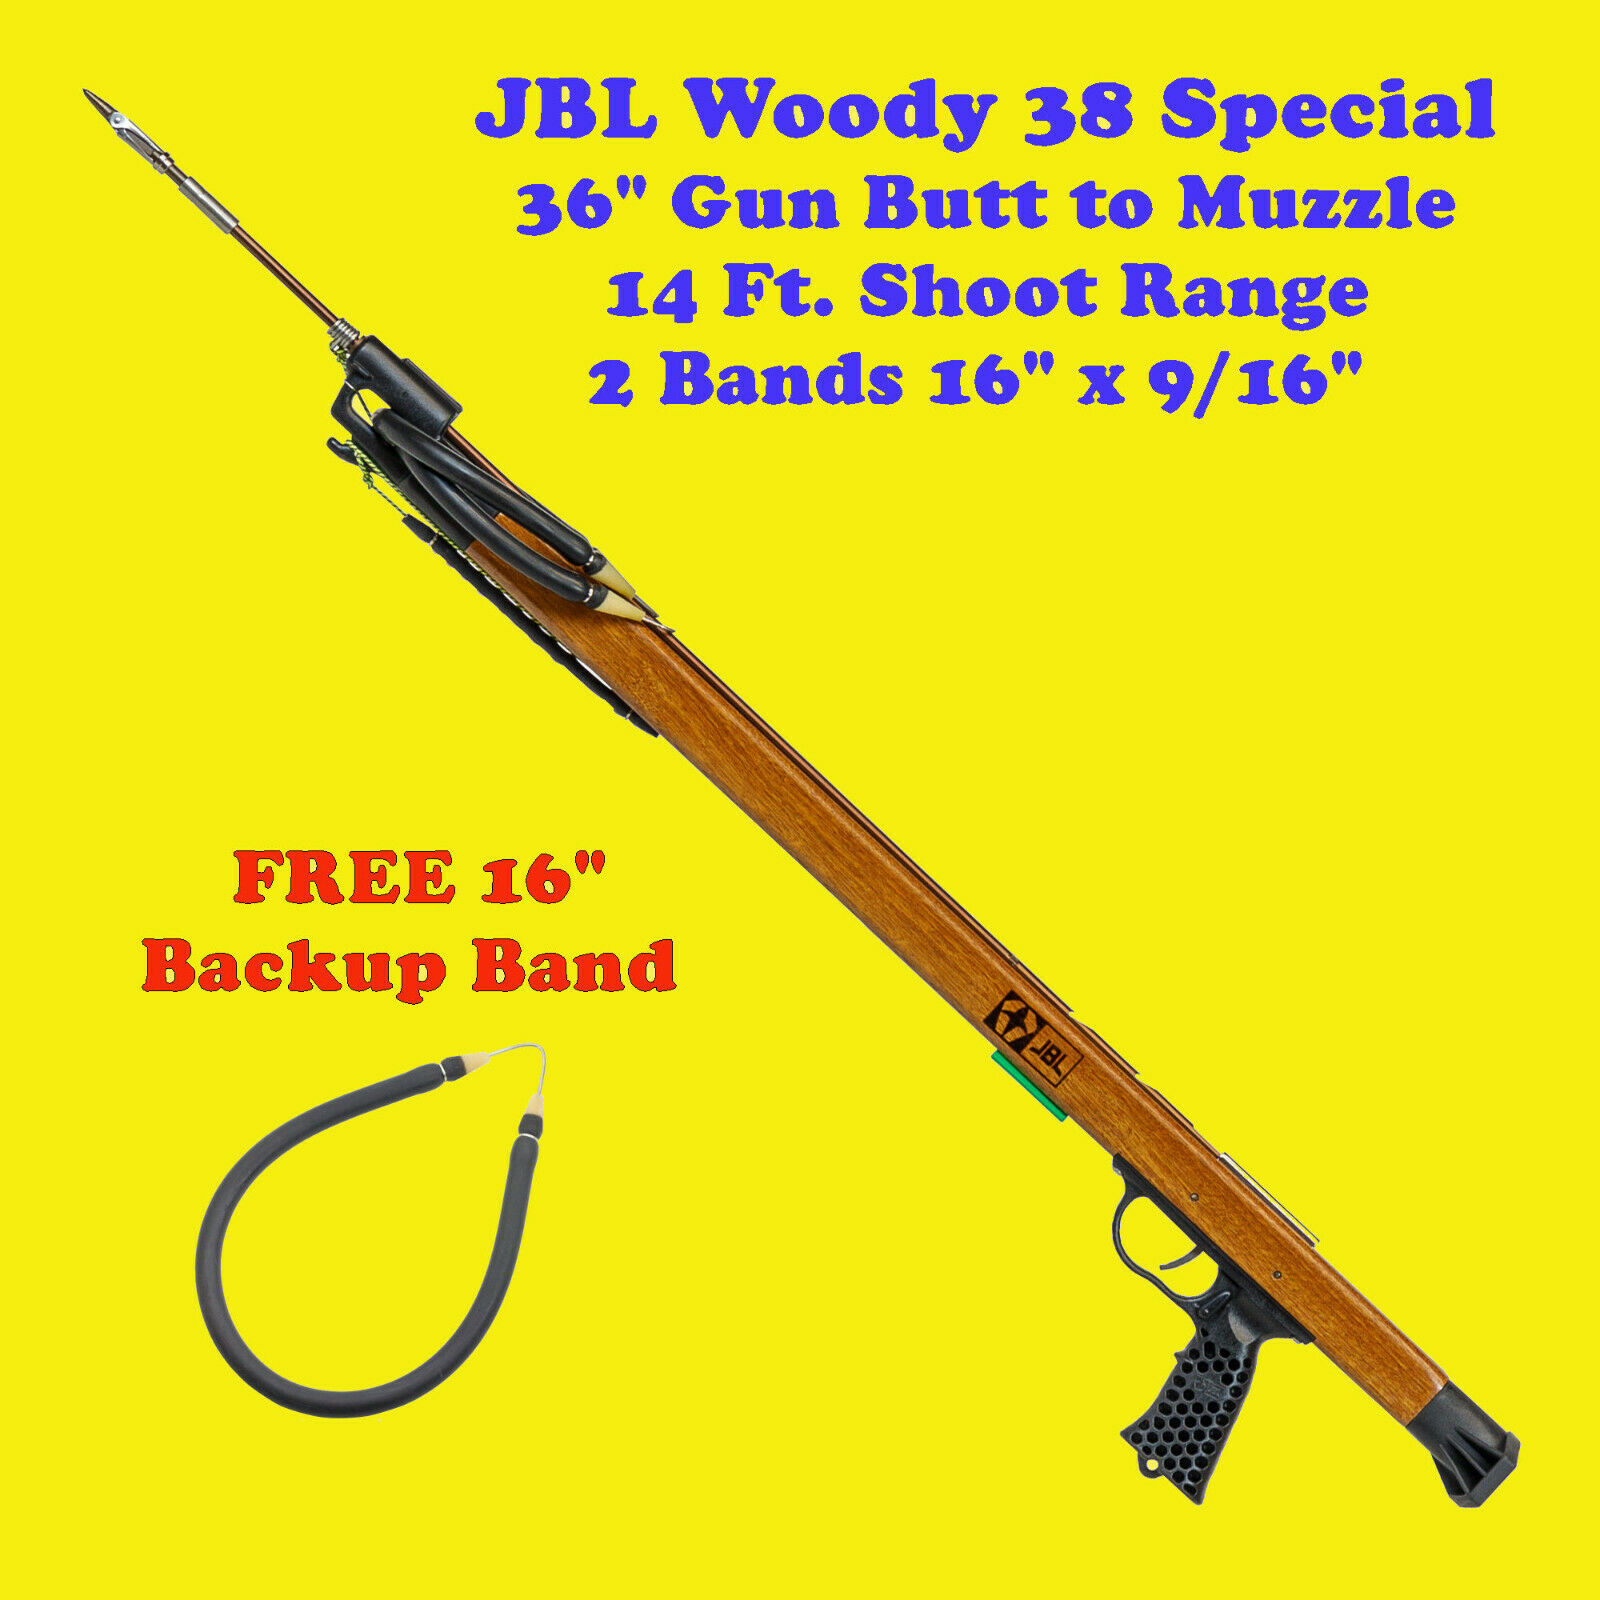 JBL Woody 38 Special Speargun Spear Gun Fish Scuba Skin